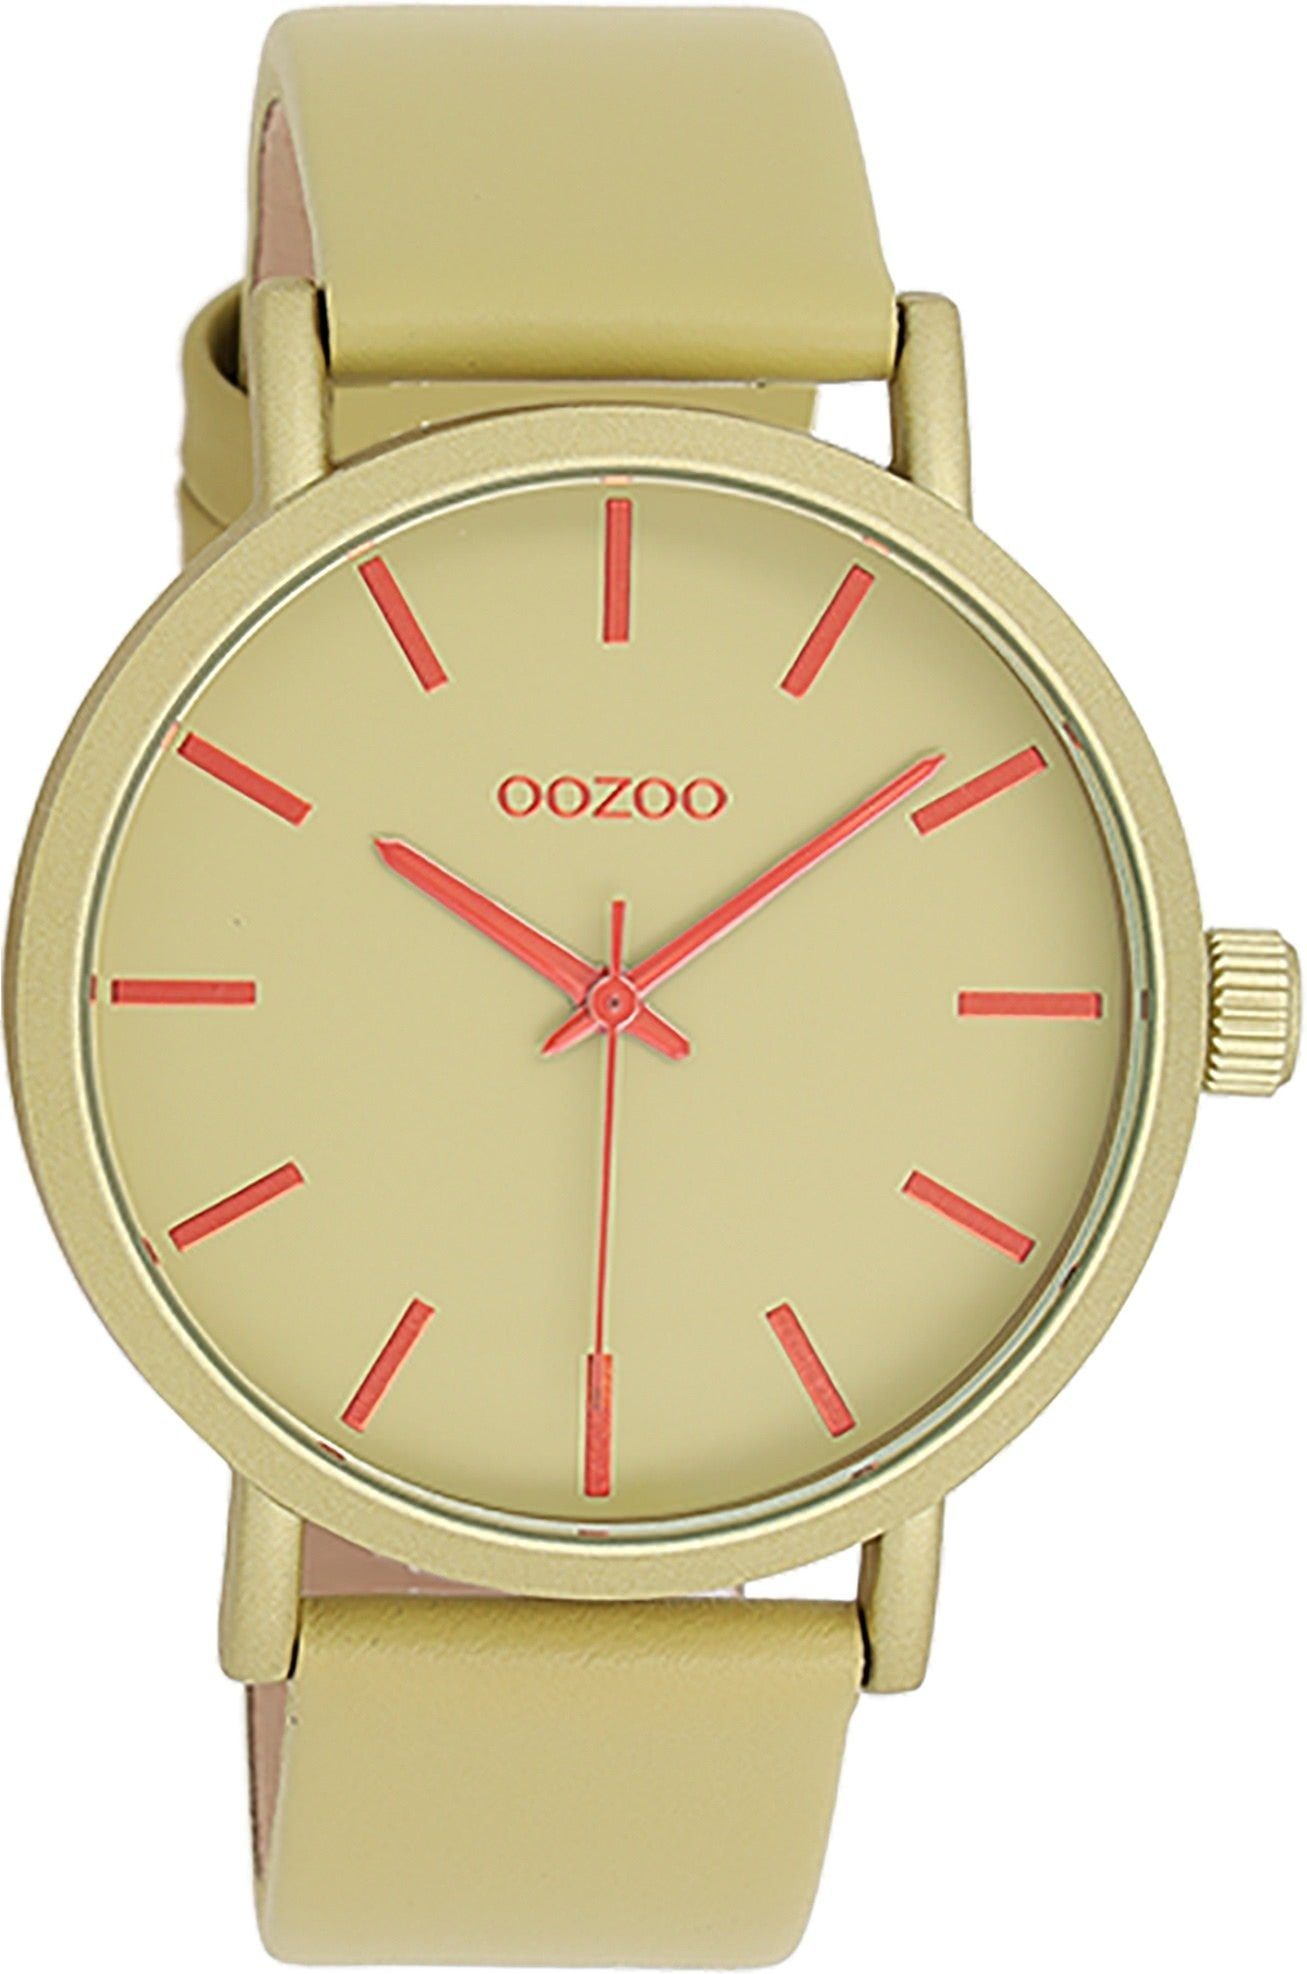 stripes rund, groß Armbanduhr Damen Damenuhr (ca. OOZOO Oozoo Fashion-Style, Quarzuhr Indizes: Lederarmband, 42mm) Timepieces Analog,